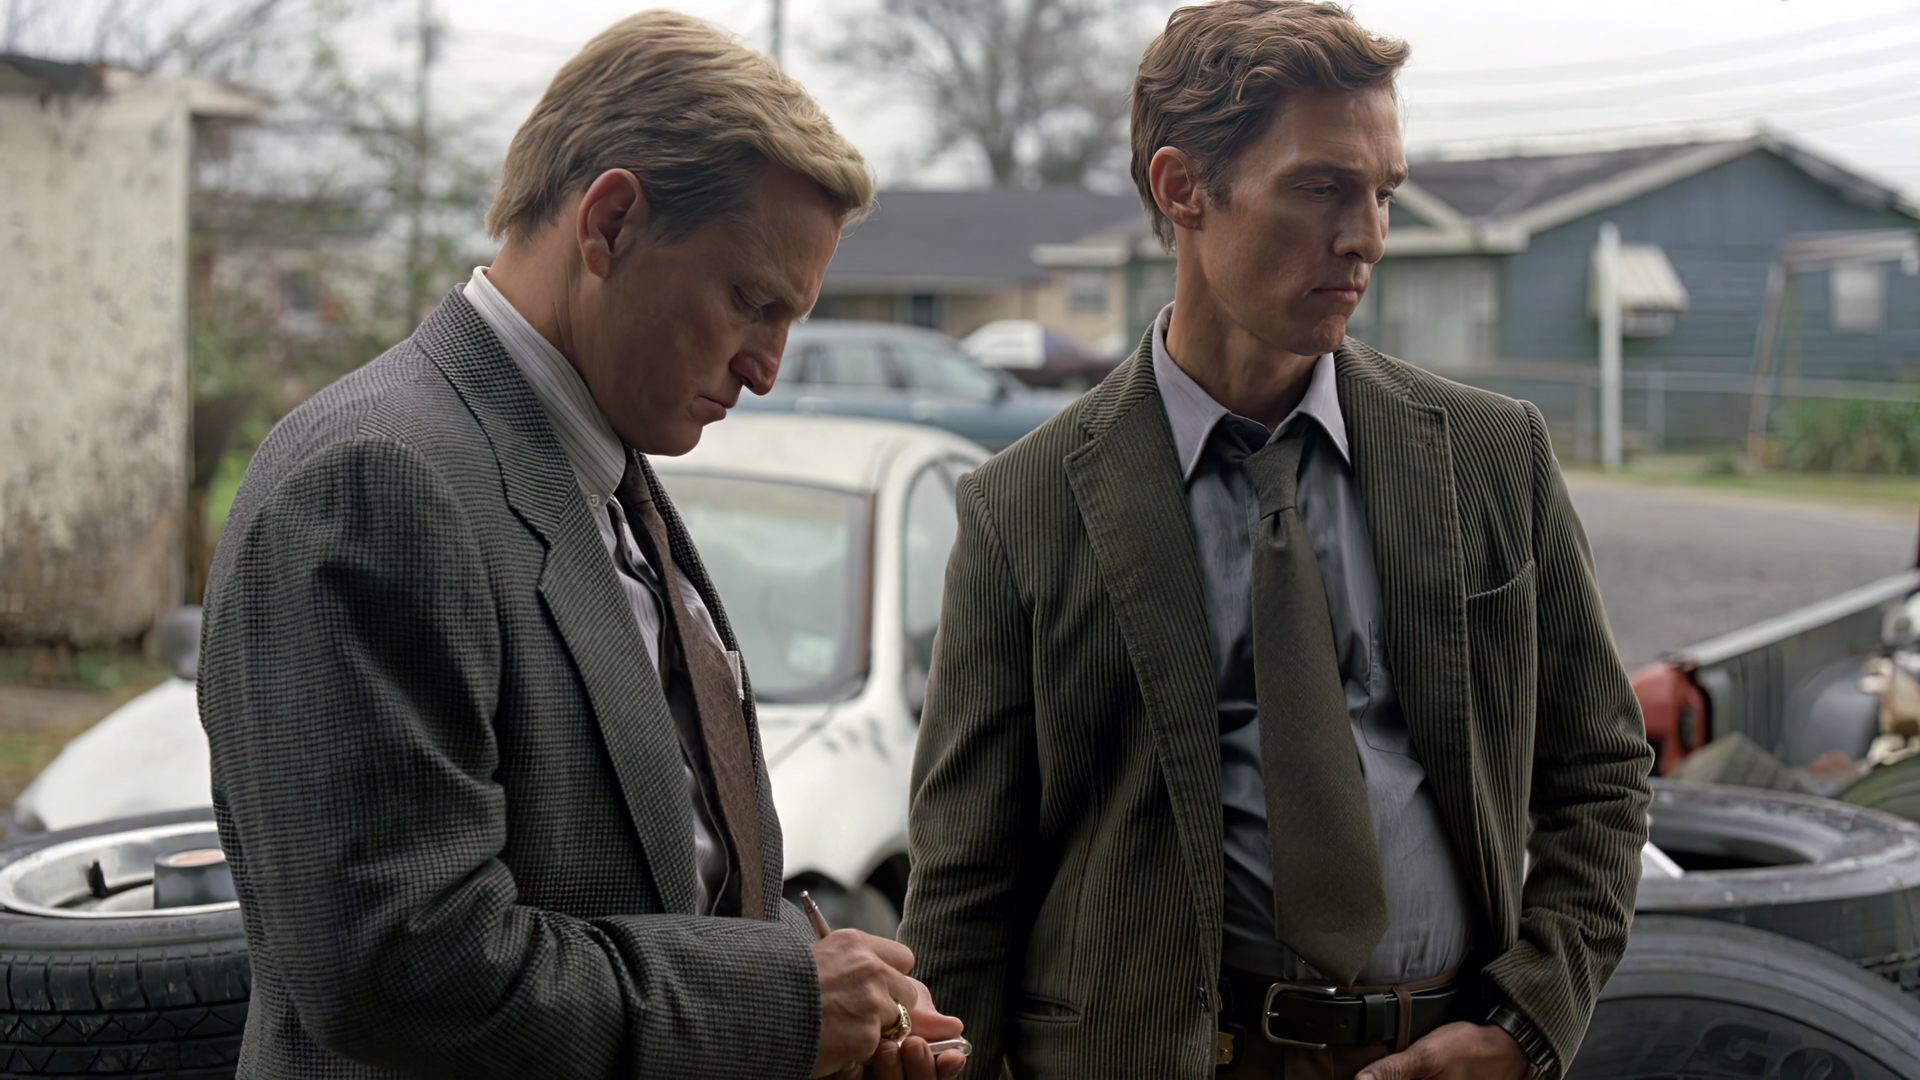 People 1920x1080 True Detective TV series film stills Matthew McConaughey Woody Harrelson actor men suit and tie street car house two men